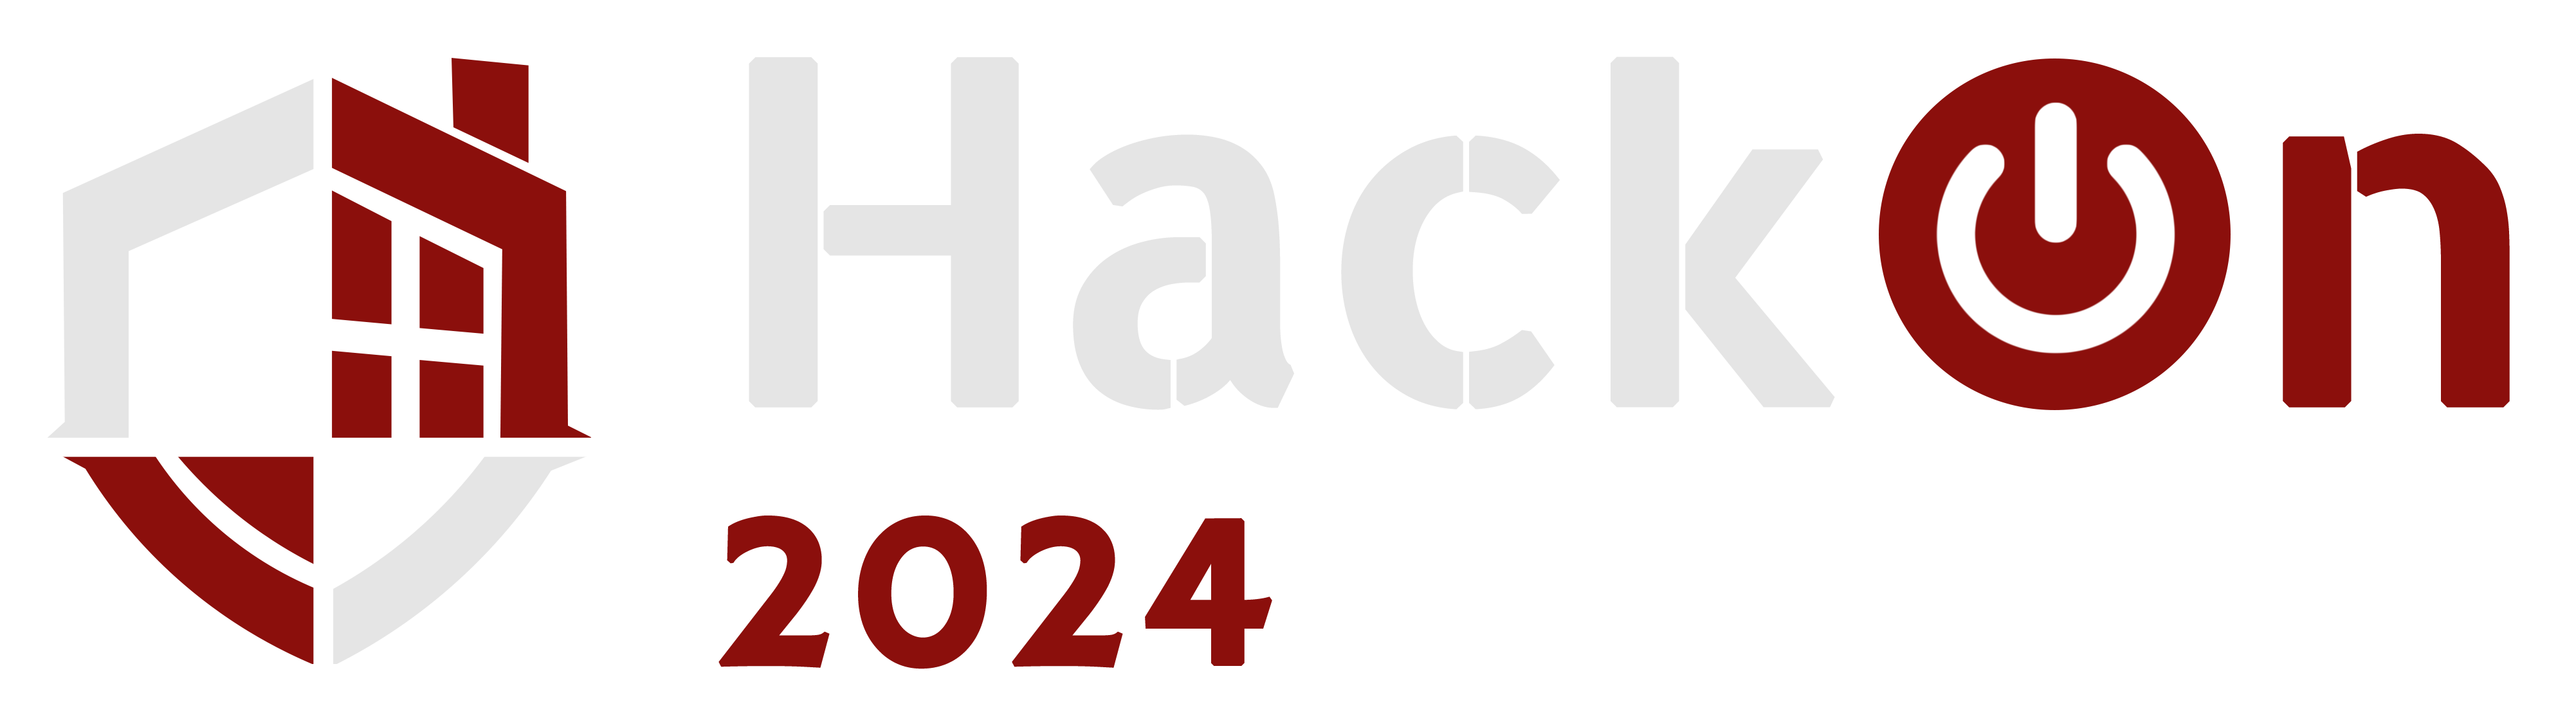 Logo HackOn 2024 horizontal